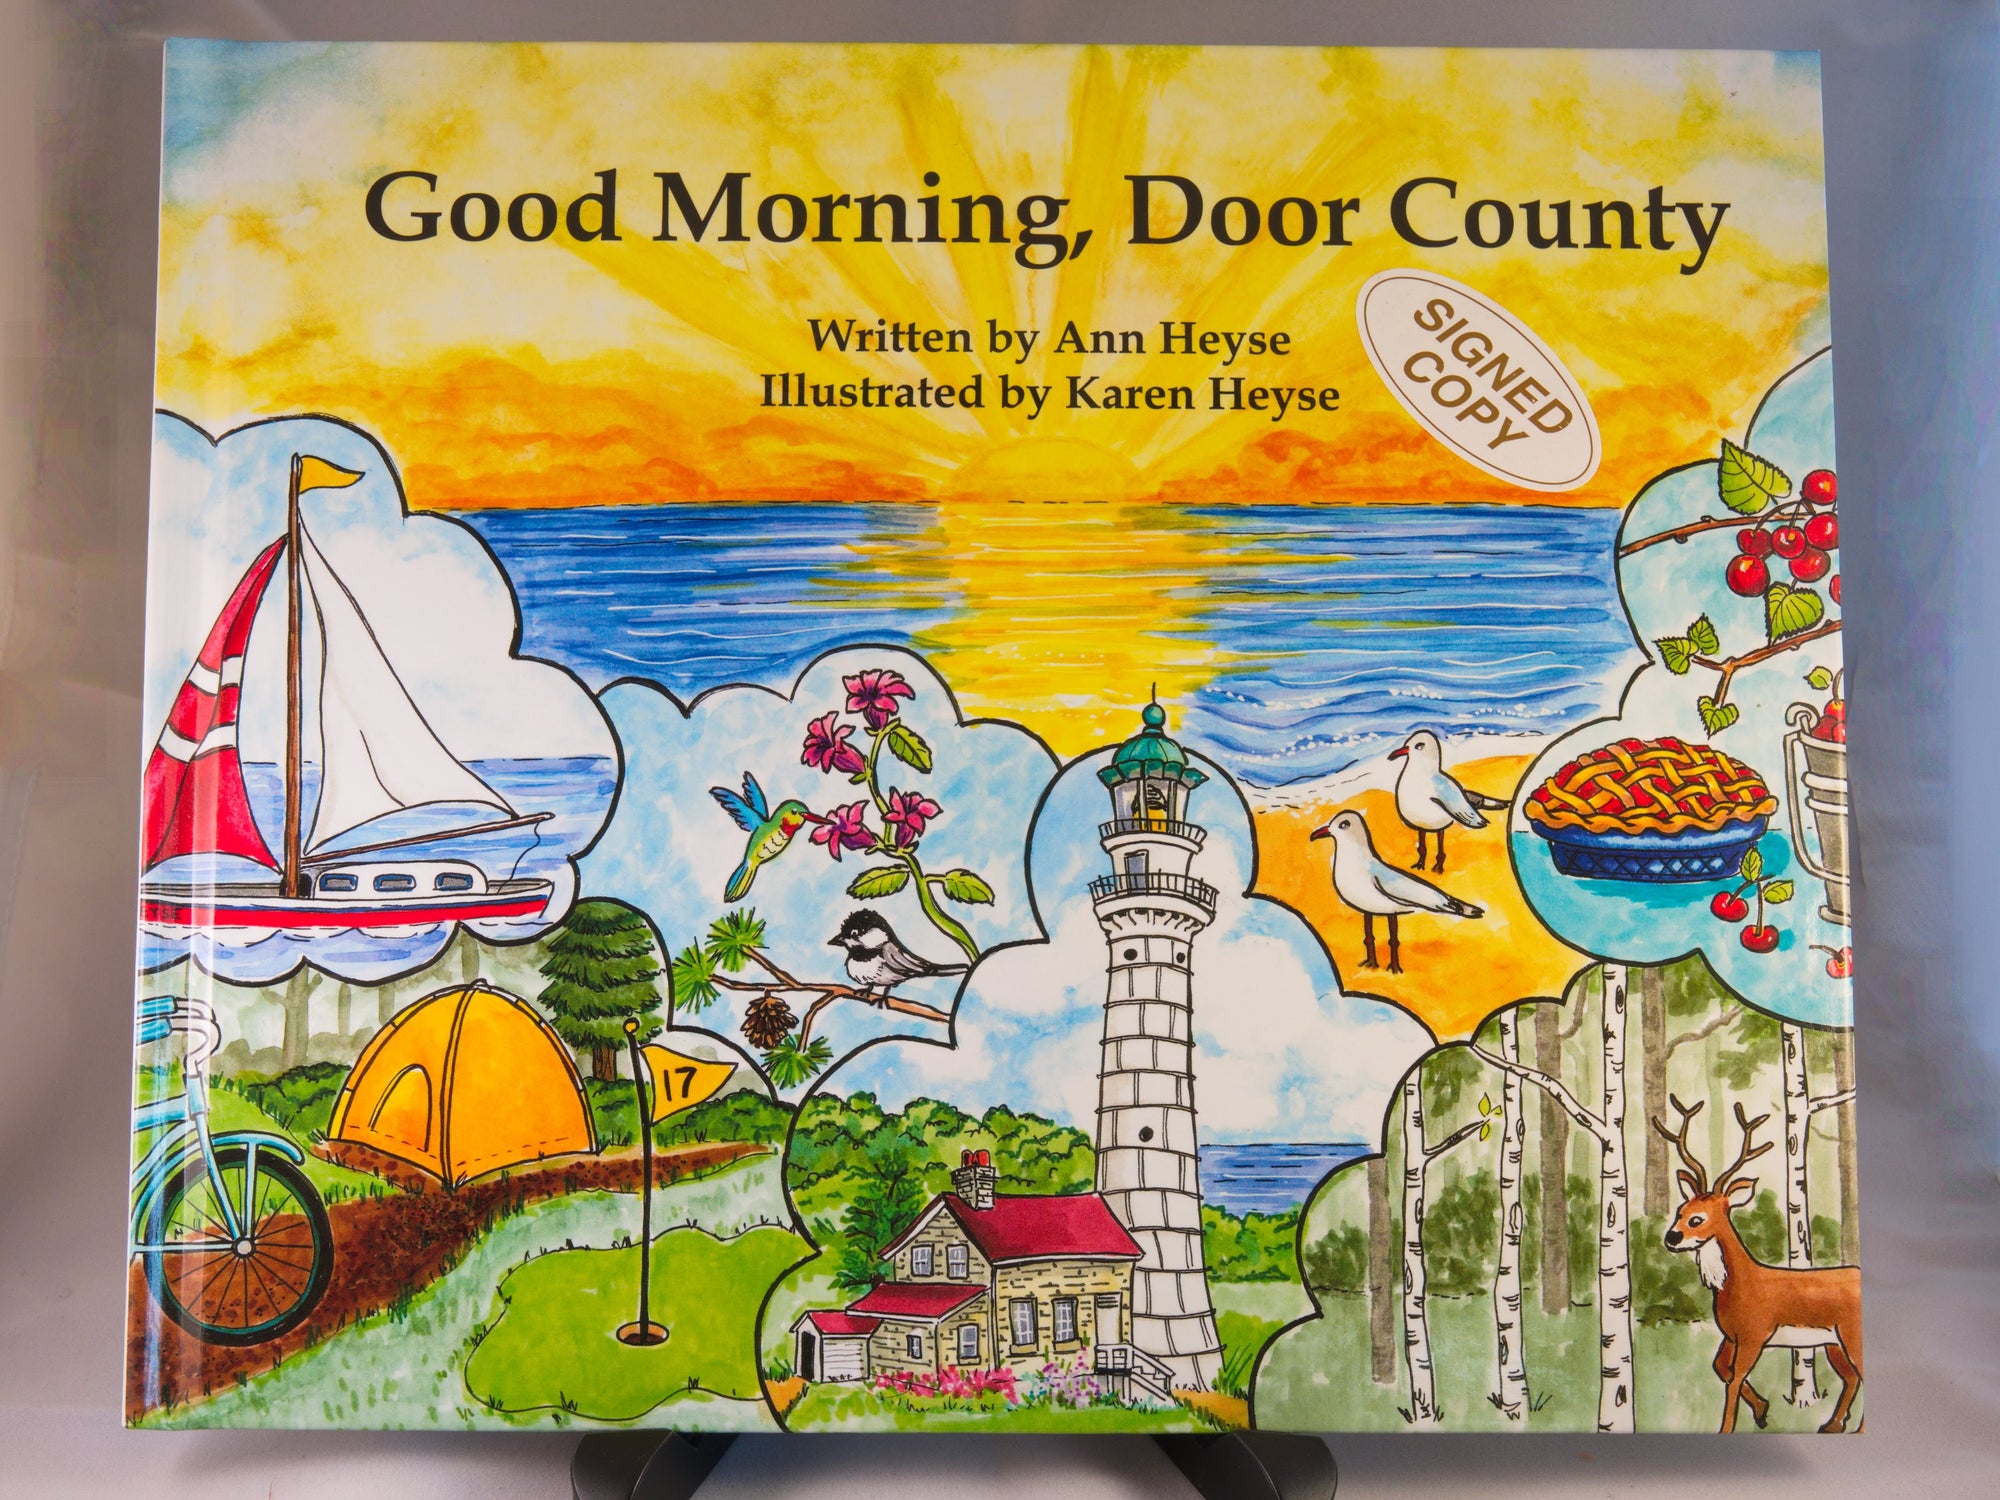 Good Morning, Door County by author Ann Heyse & illustrator Karen Heyse - signed copy (IS)